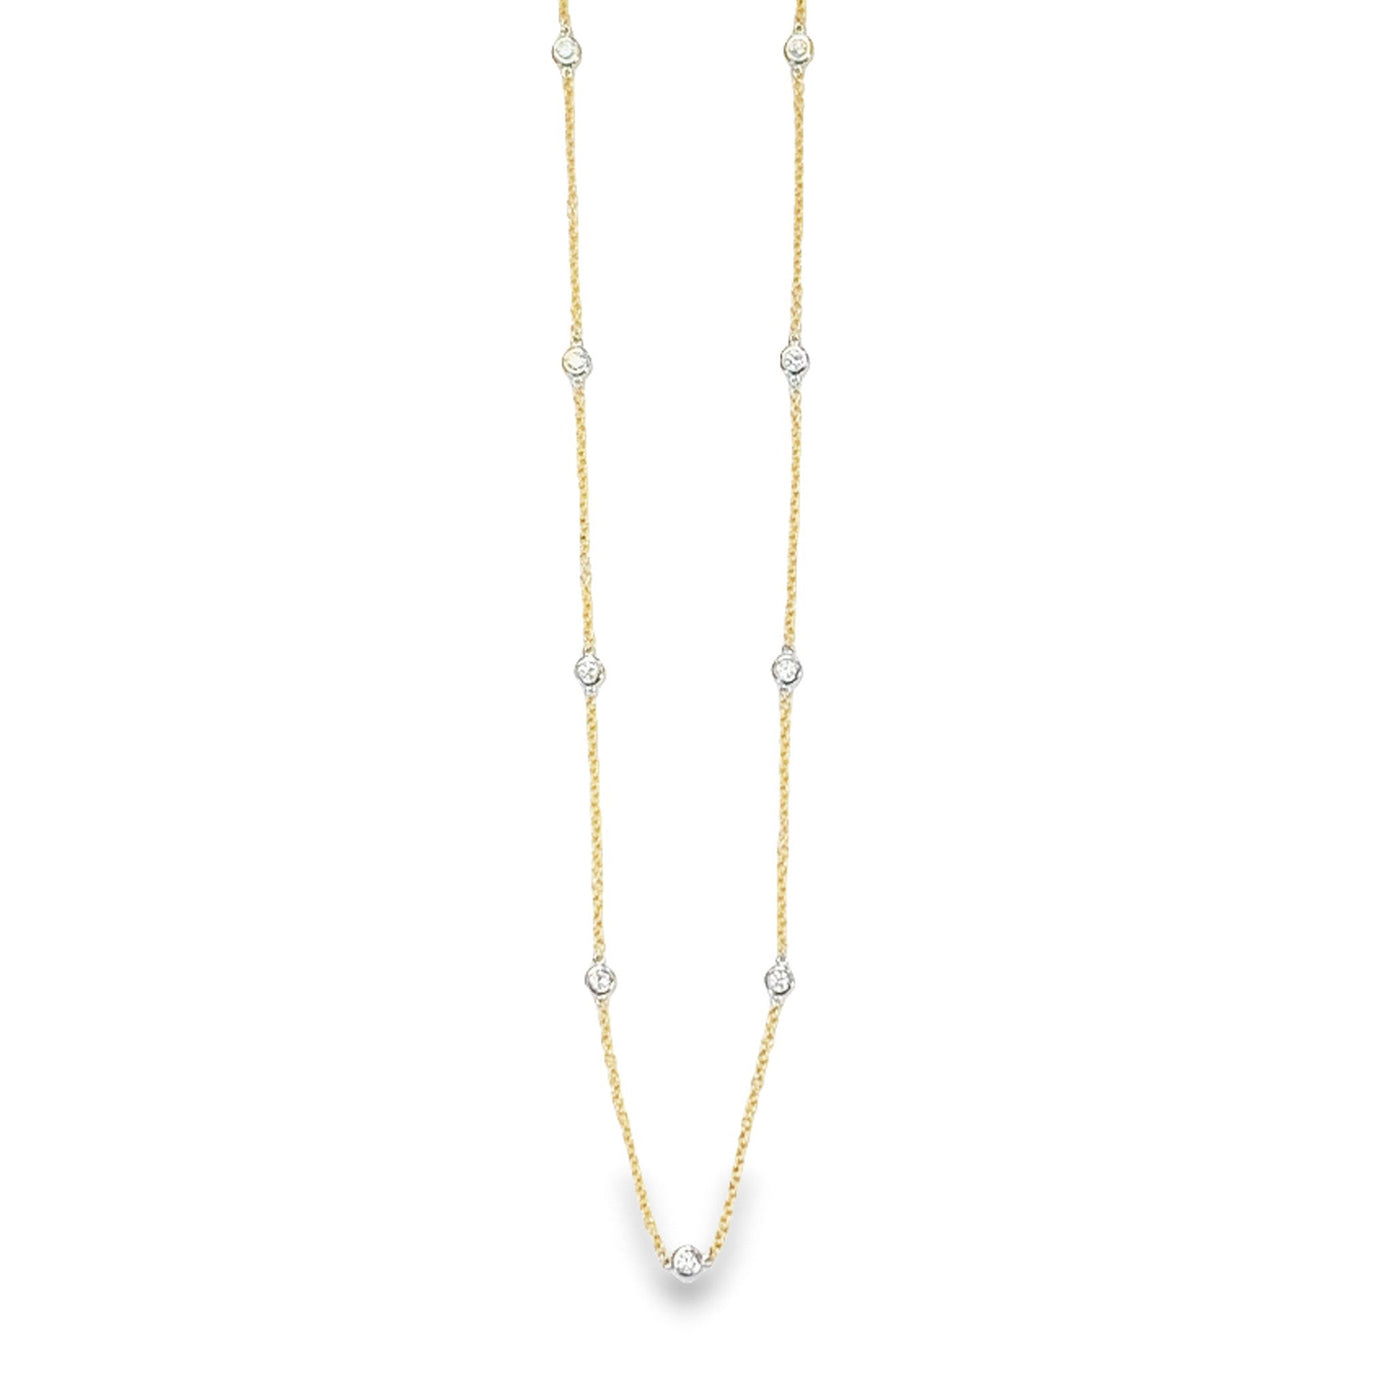 DA Gold 14k White & Yellow Gold Diamond Station Necklace,18" – N8301/YW/18"